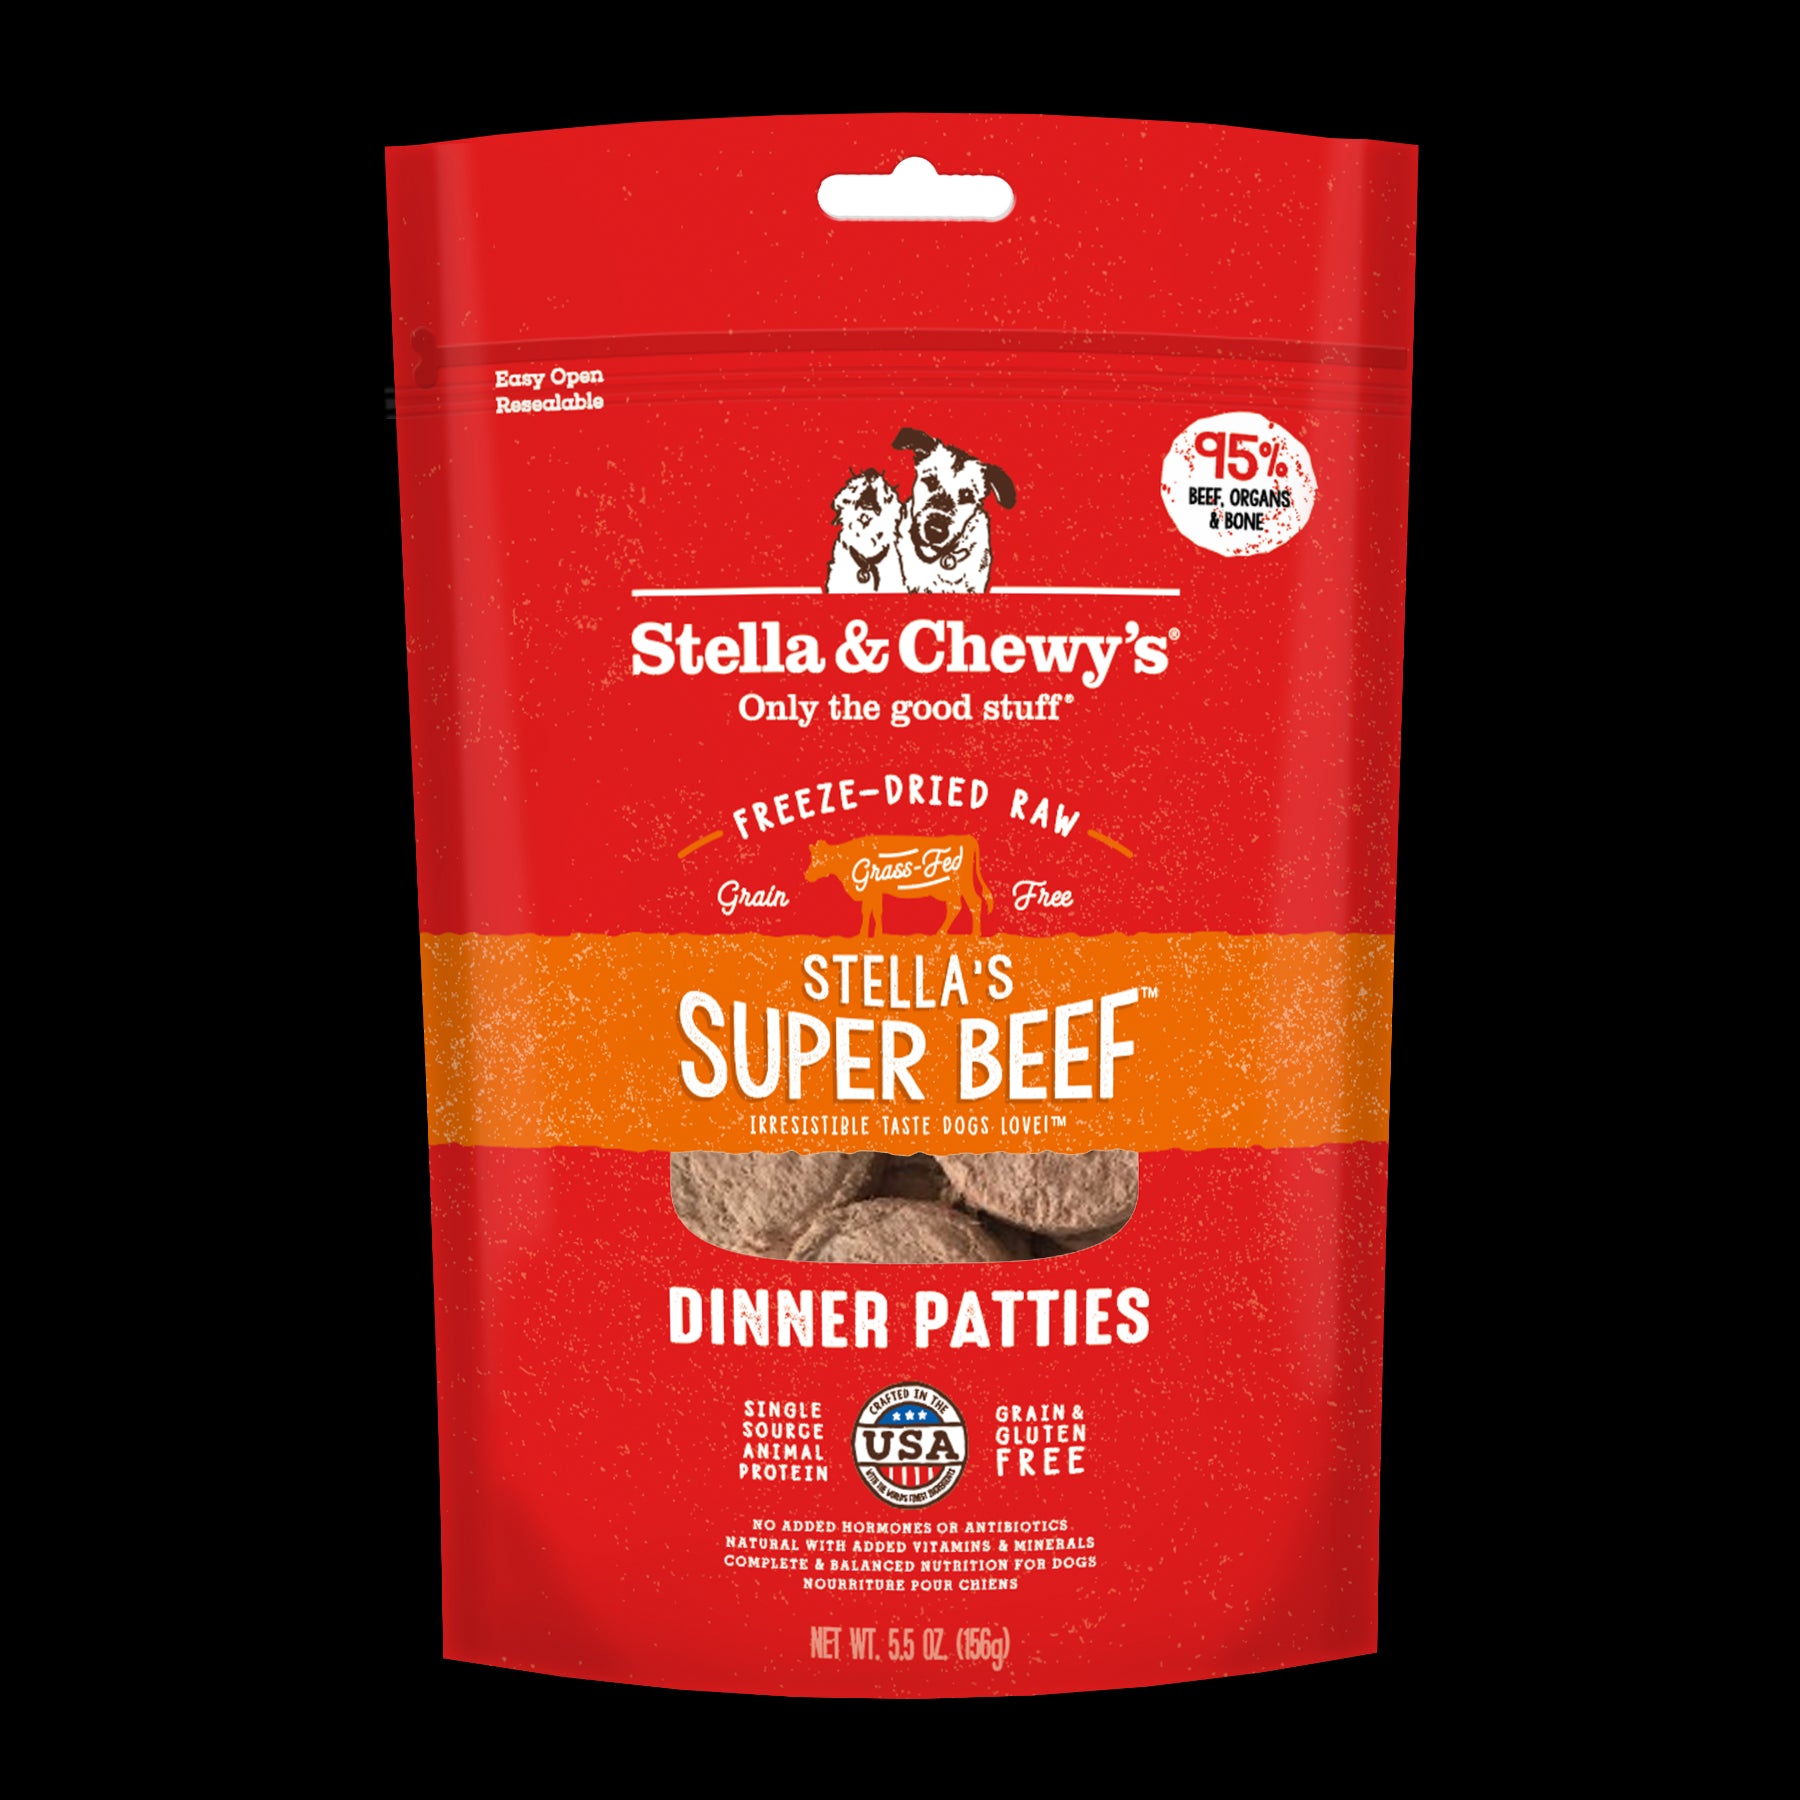 Stella & Chewy's Super Beef Freeze-Dried Raw Dinner Patties